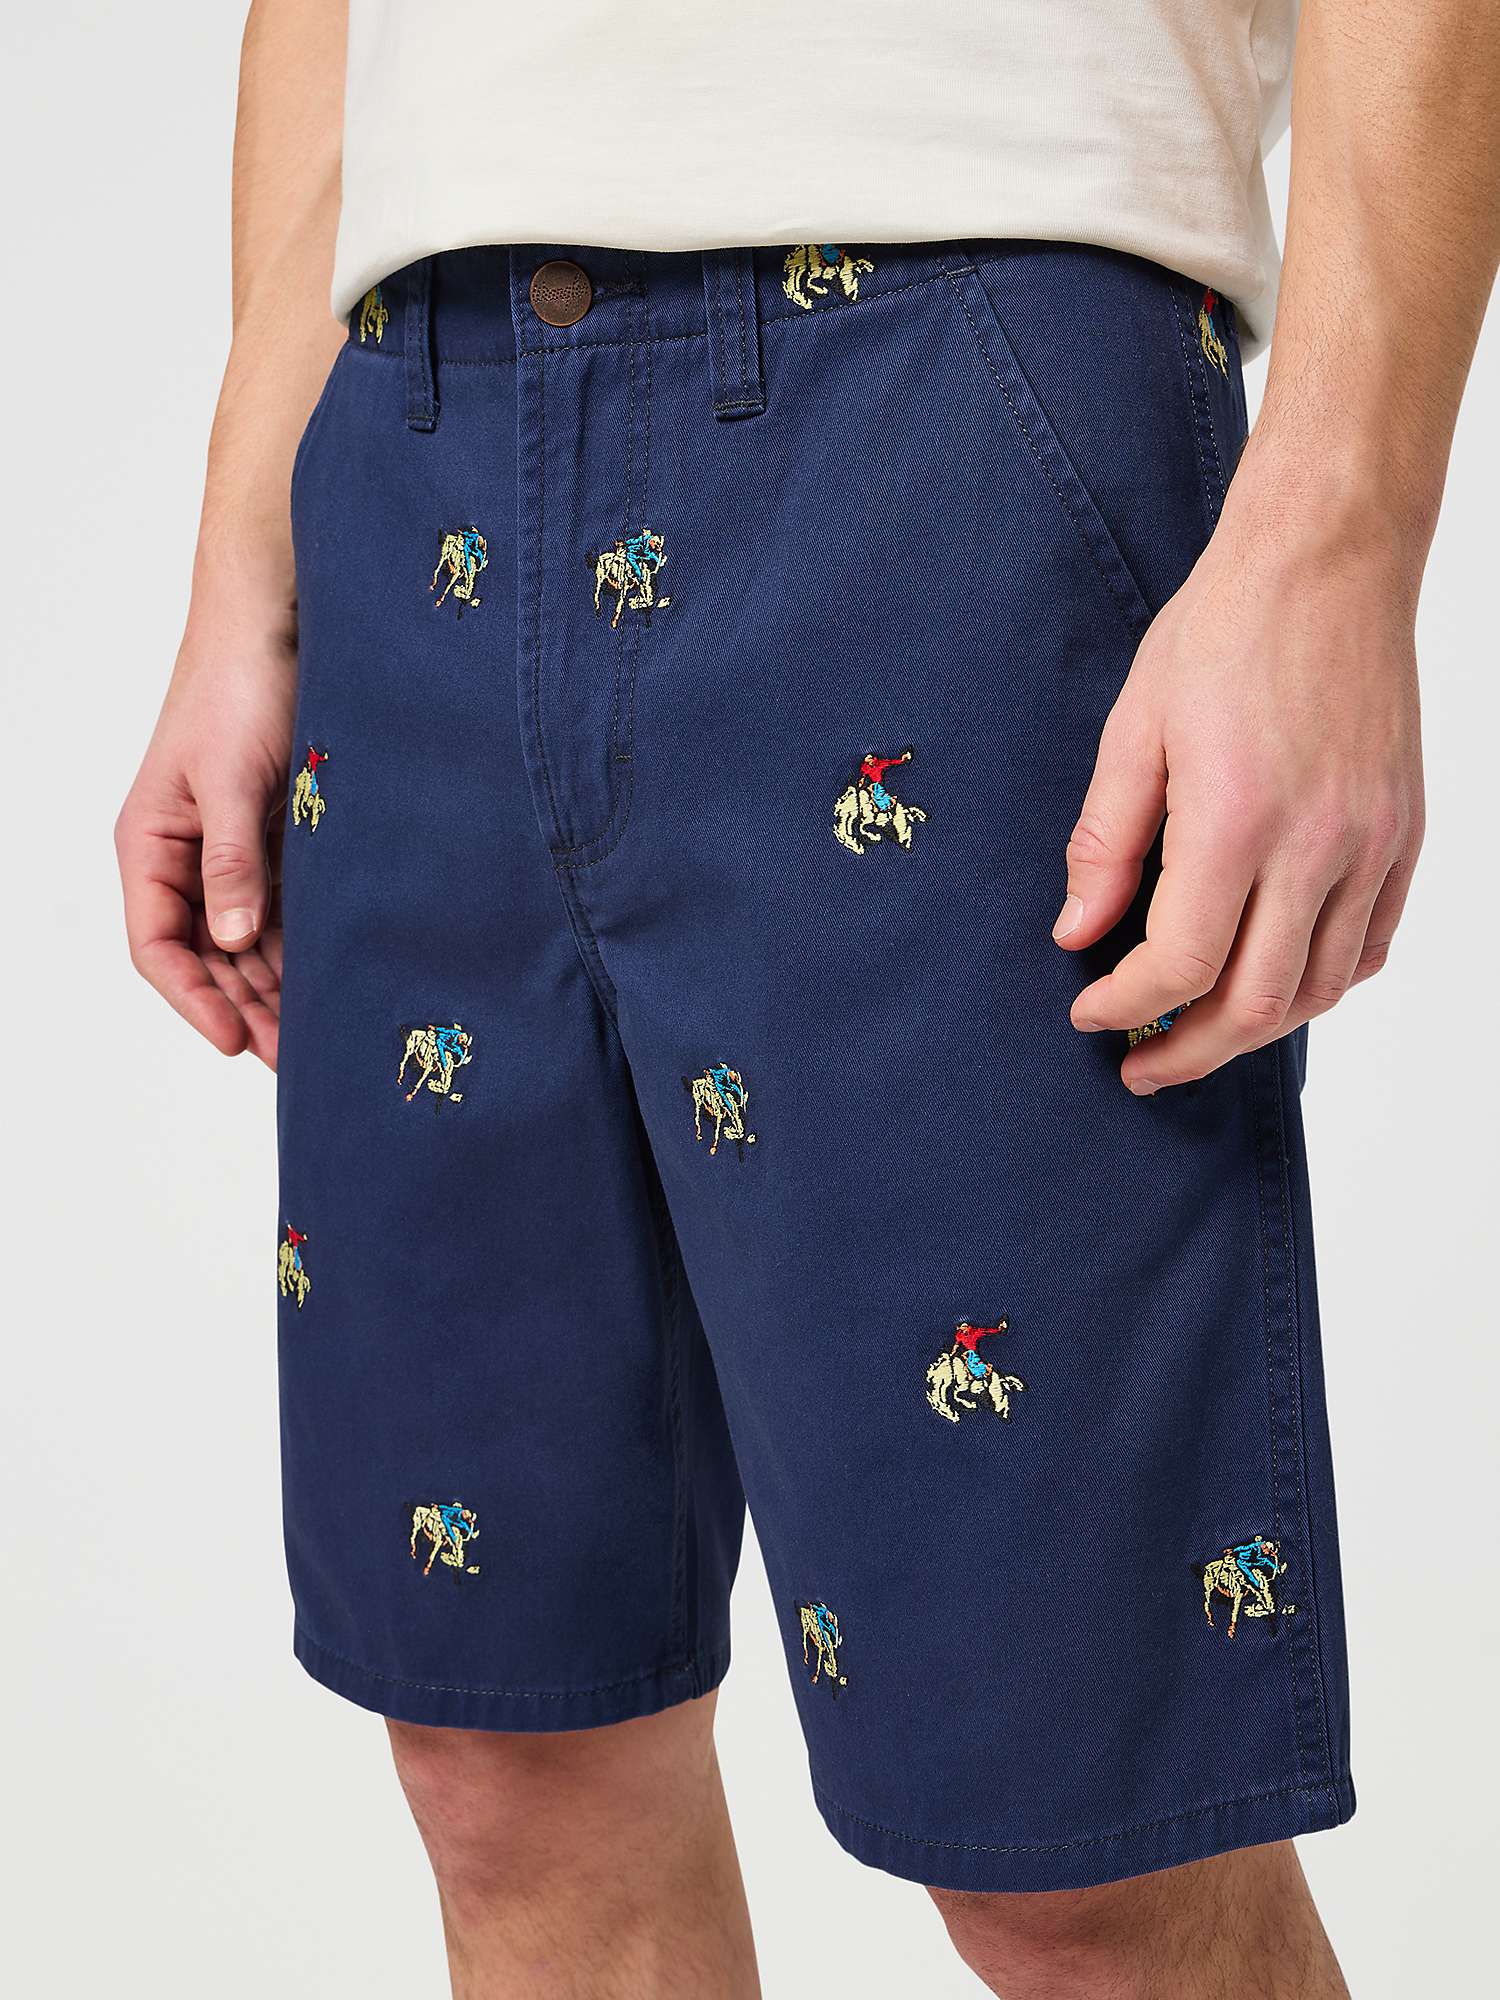 Buy Wrangler Critter Chino Shorts, Dark Navy Online at johnlewis.com